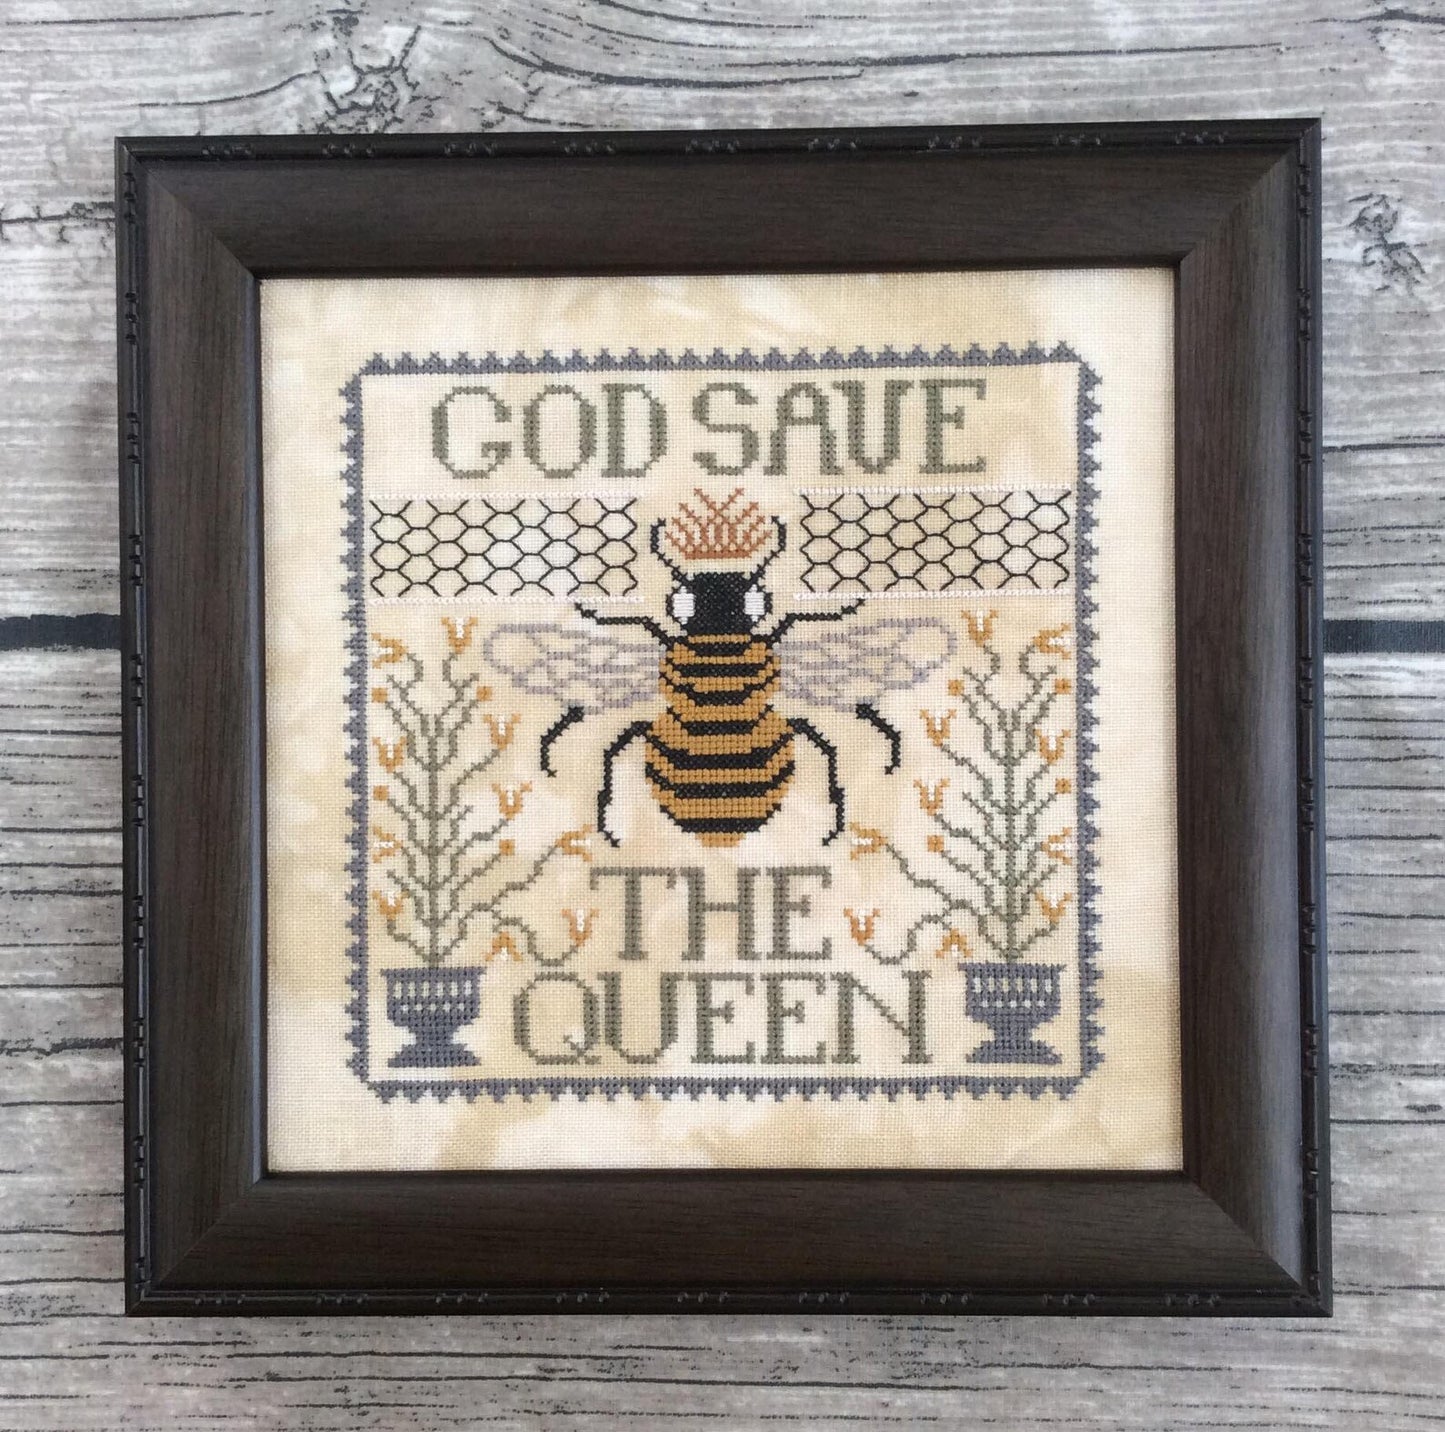 God Save the Queen NW-27 cross-stitch pattern by Annie Beez Folk Art